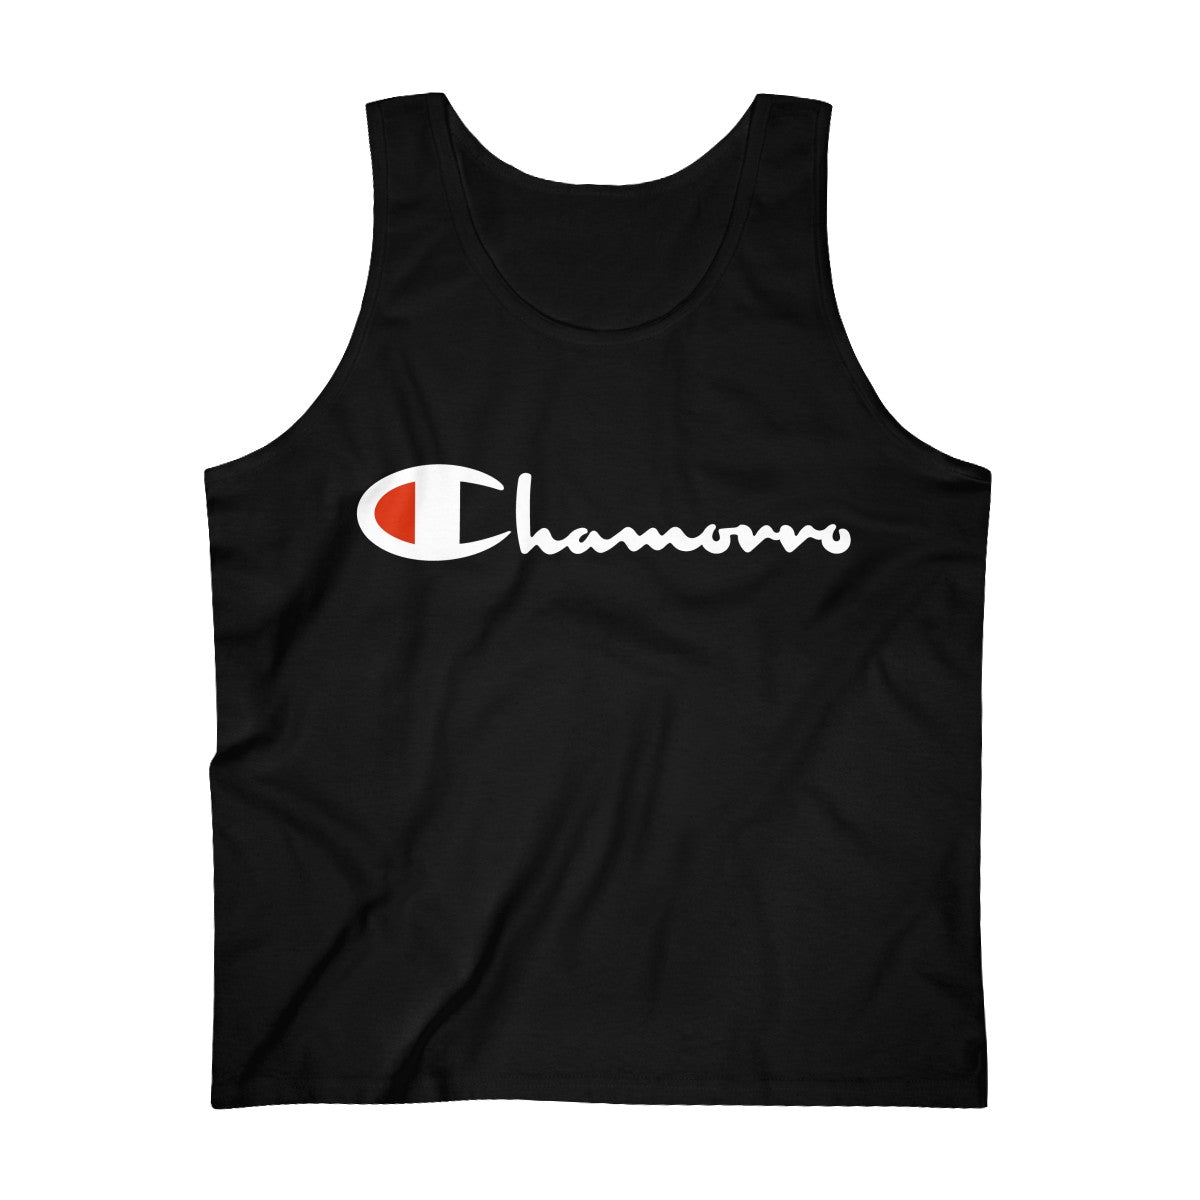 Chamorro Champ Men's Ultra Cotton Tank Top